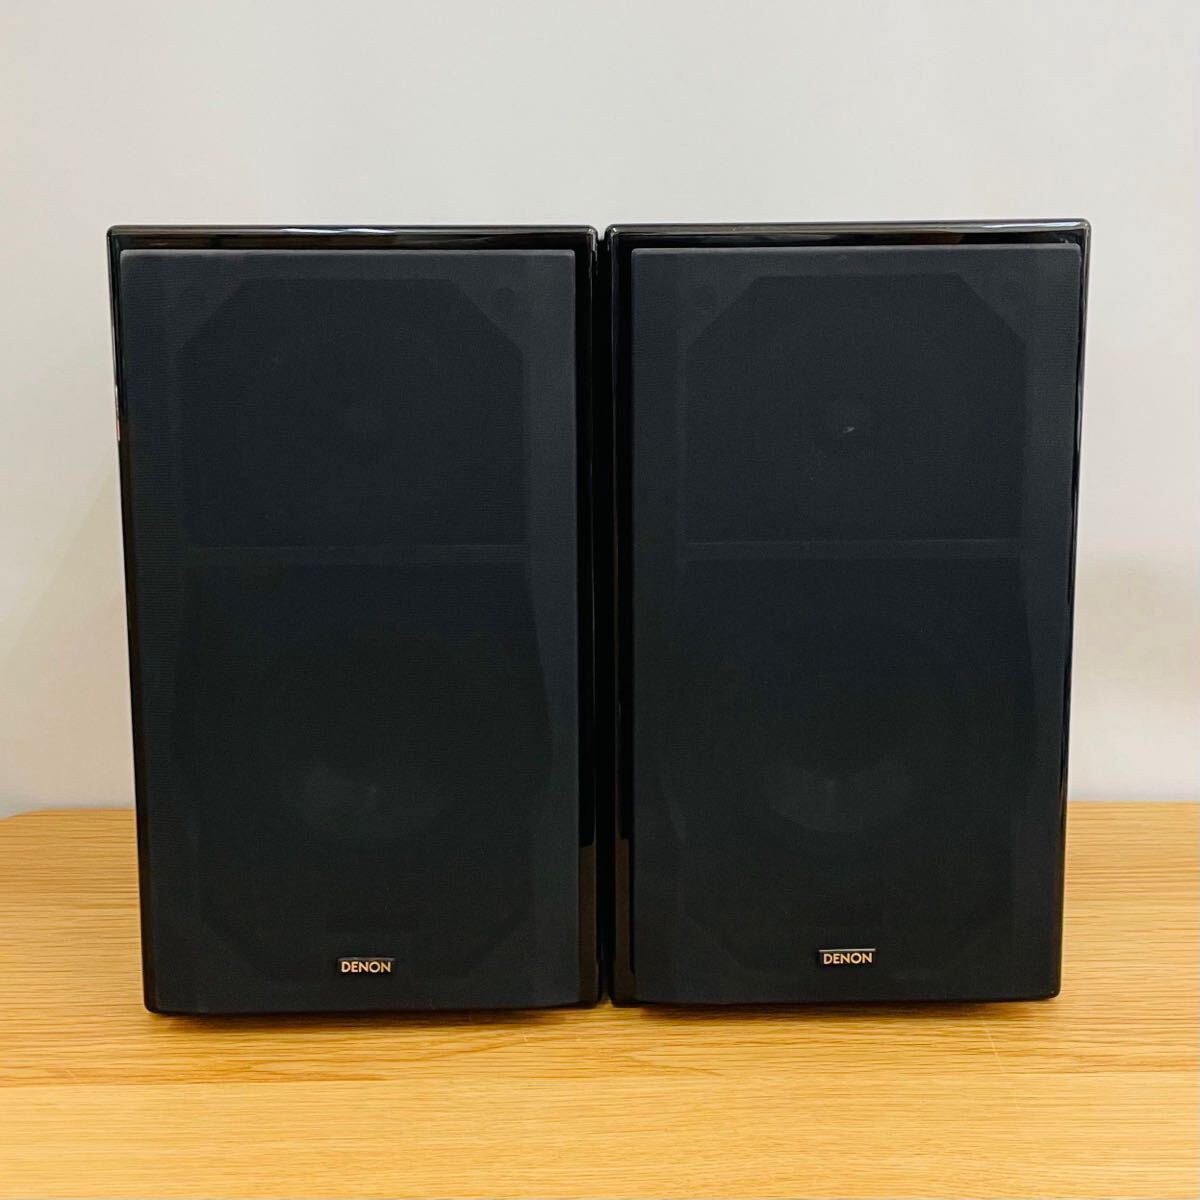 DENON SC-E757 Speaker Denon динамик пара i17975 120 размер отправка работа хороший 